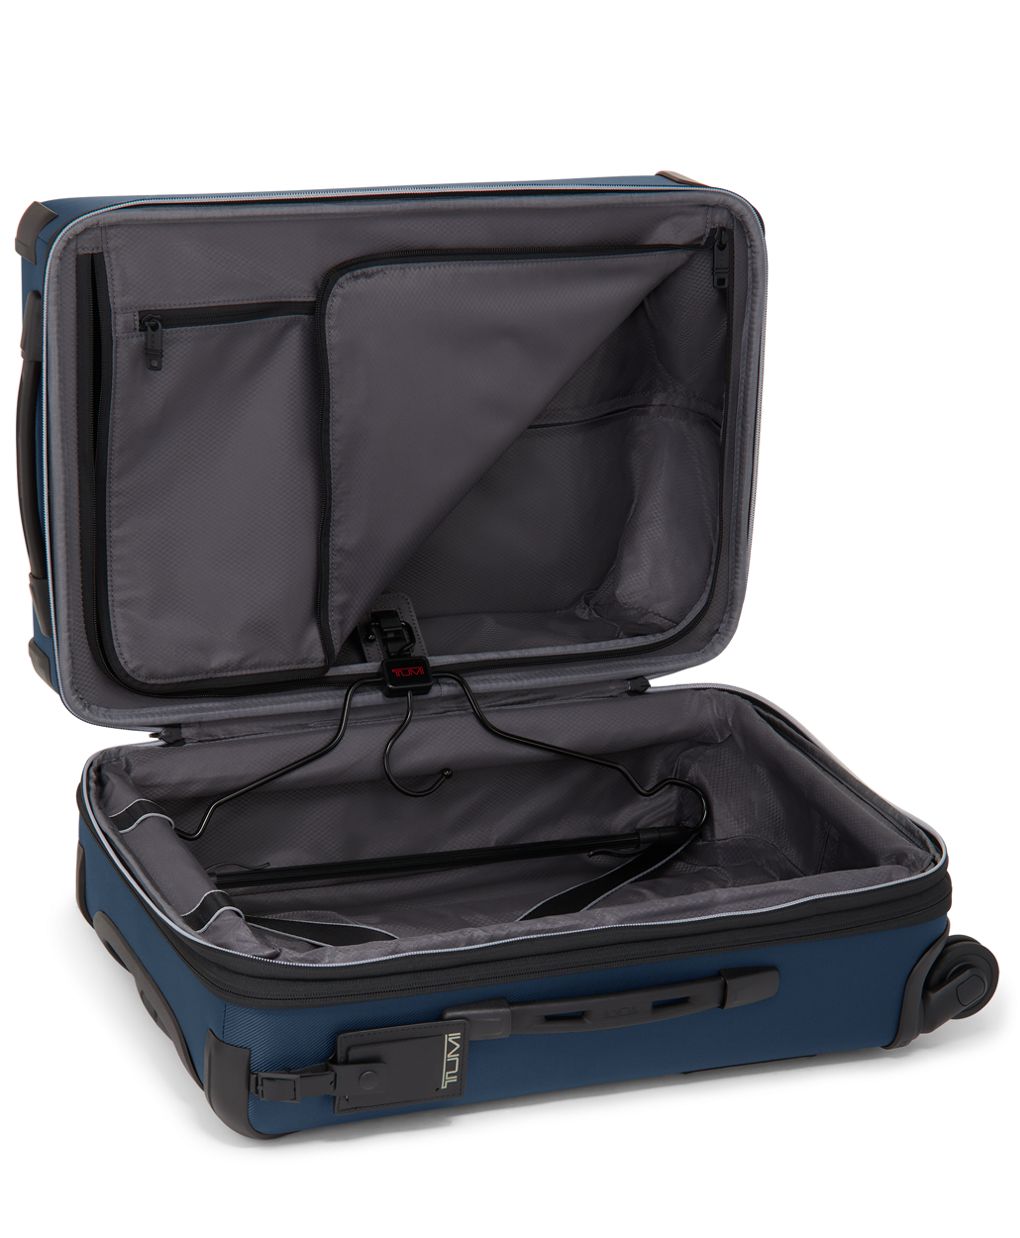 Replacement Telescopic Suitcase Handle, Luggage Parts Handle, Repair  Aluminum Trolley Built Tie Rod, Handles for Suitcases - China Handle, Luggage  Handle